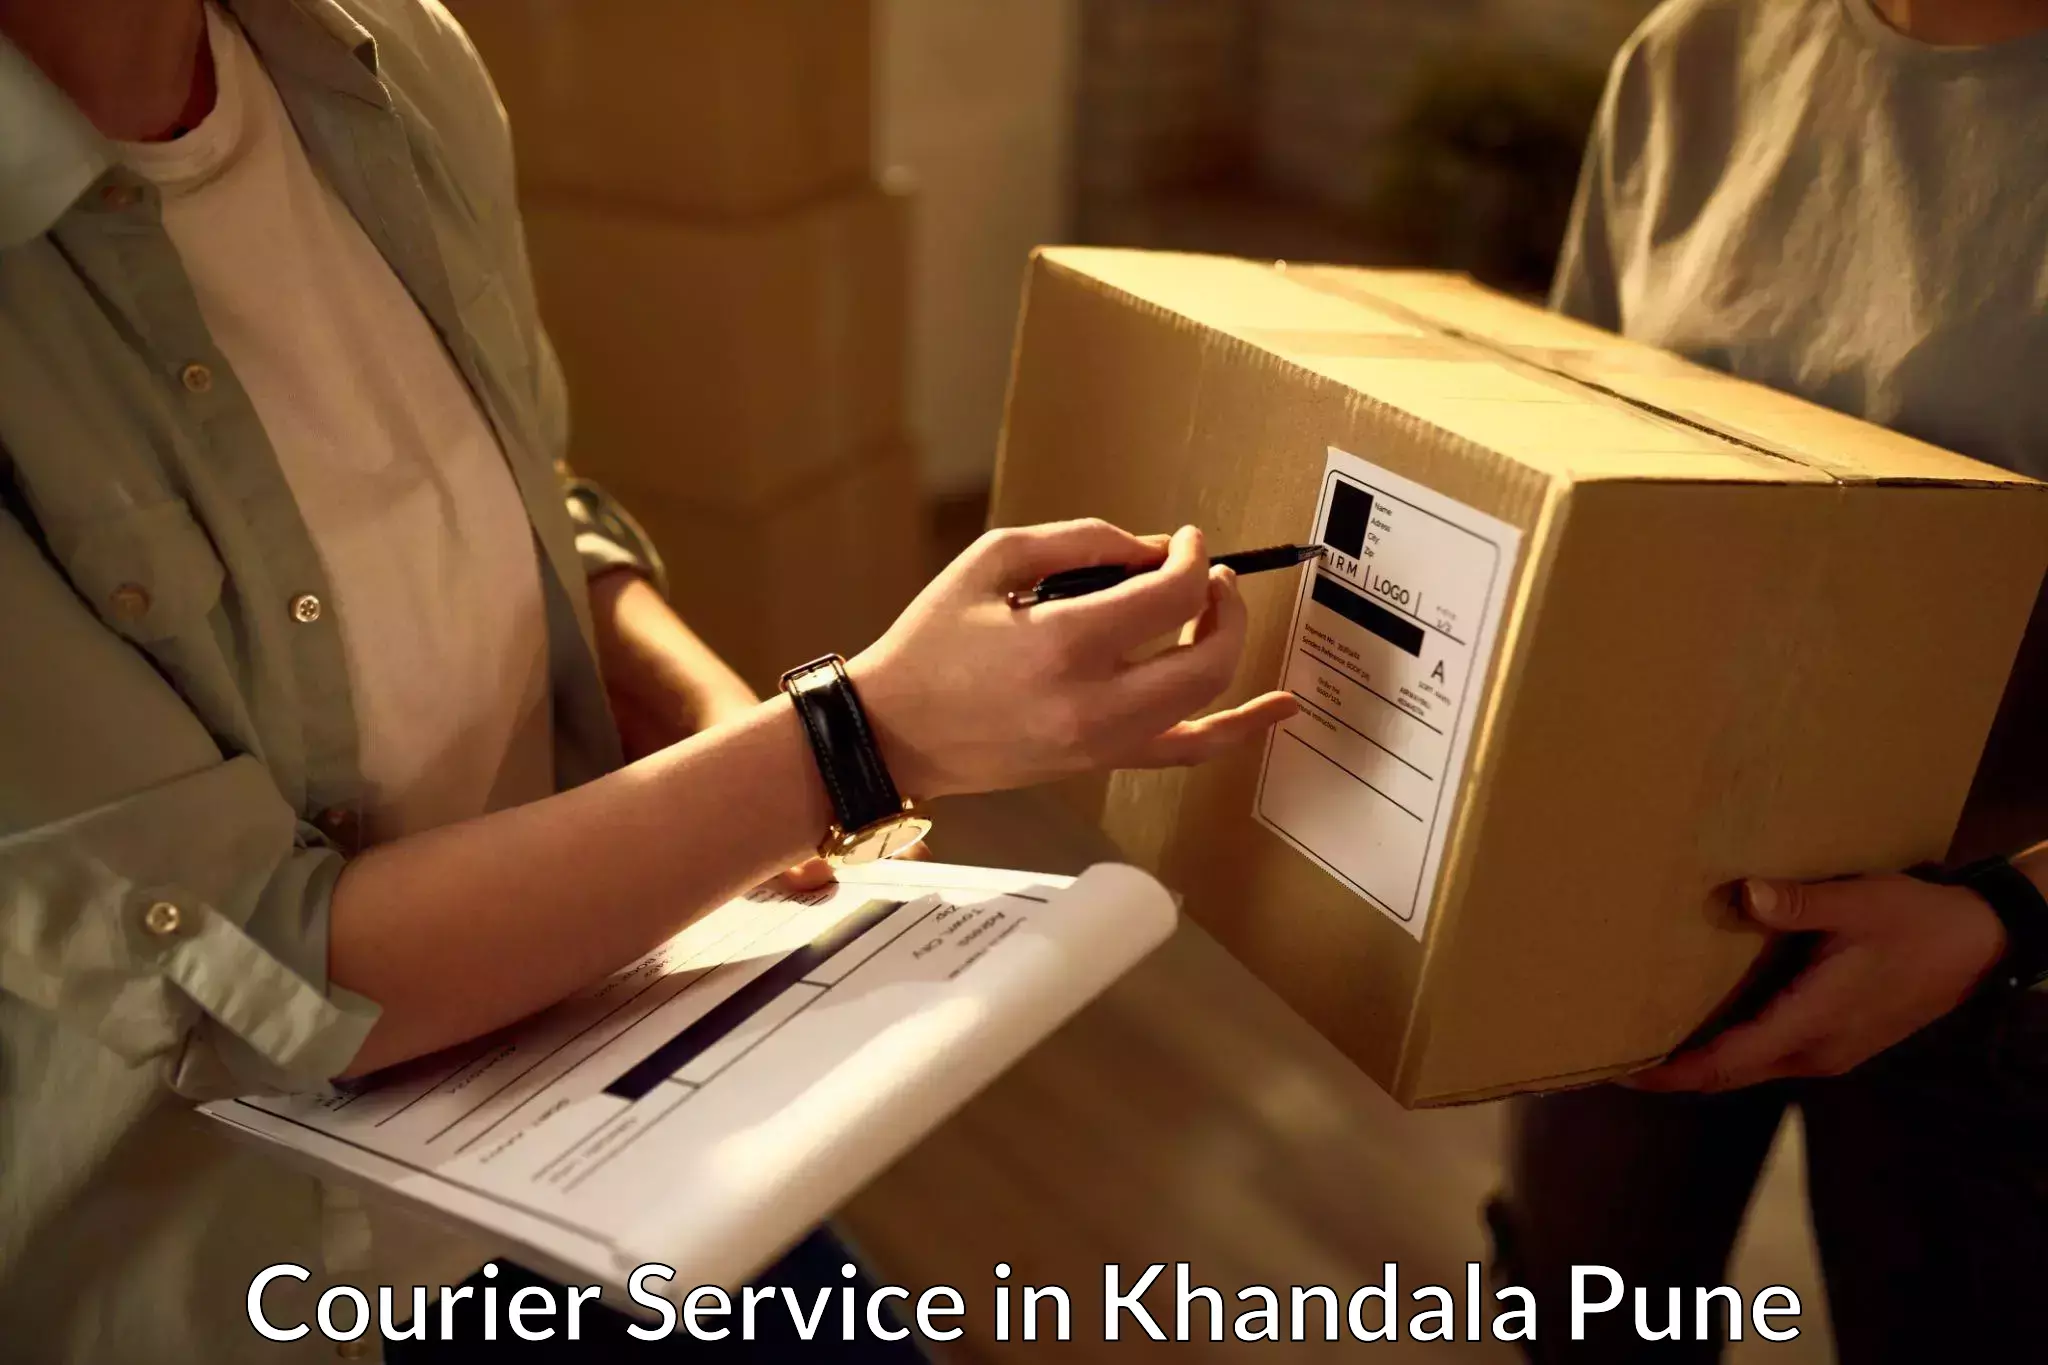 Expedited shipping methods in Khandala Pune